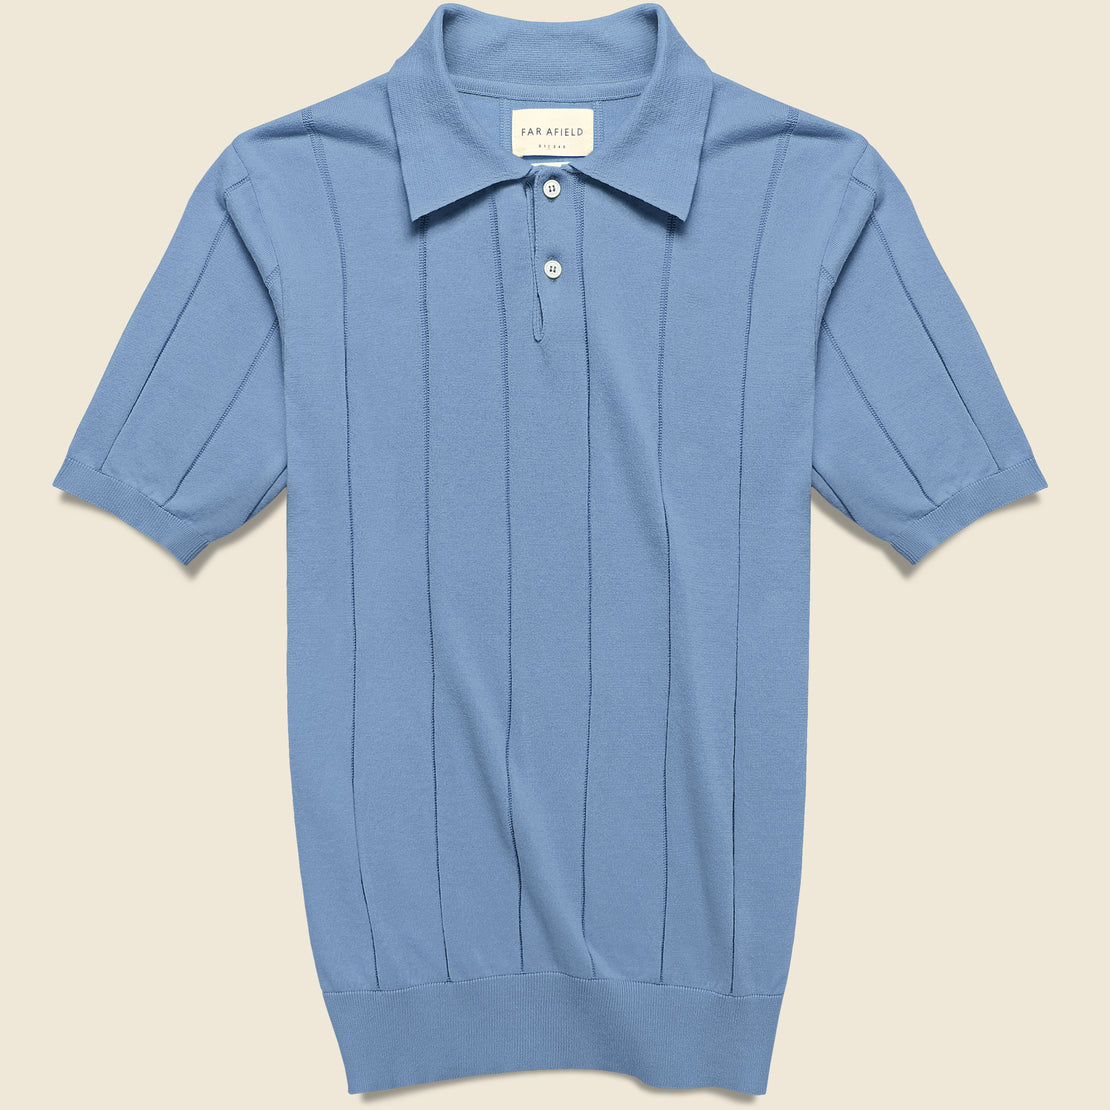 Far Afield Knit Jacobs Polo - Allure Blue